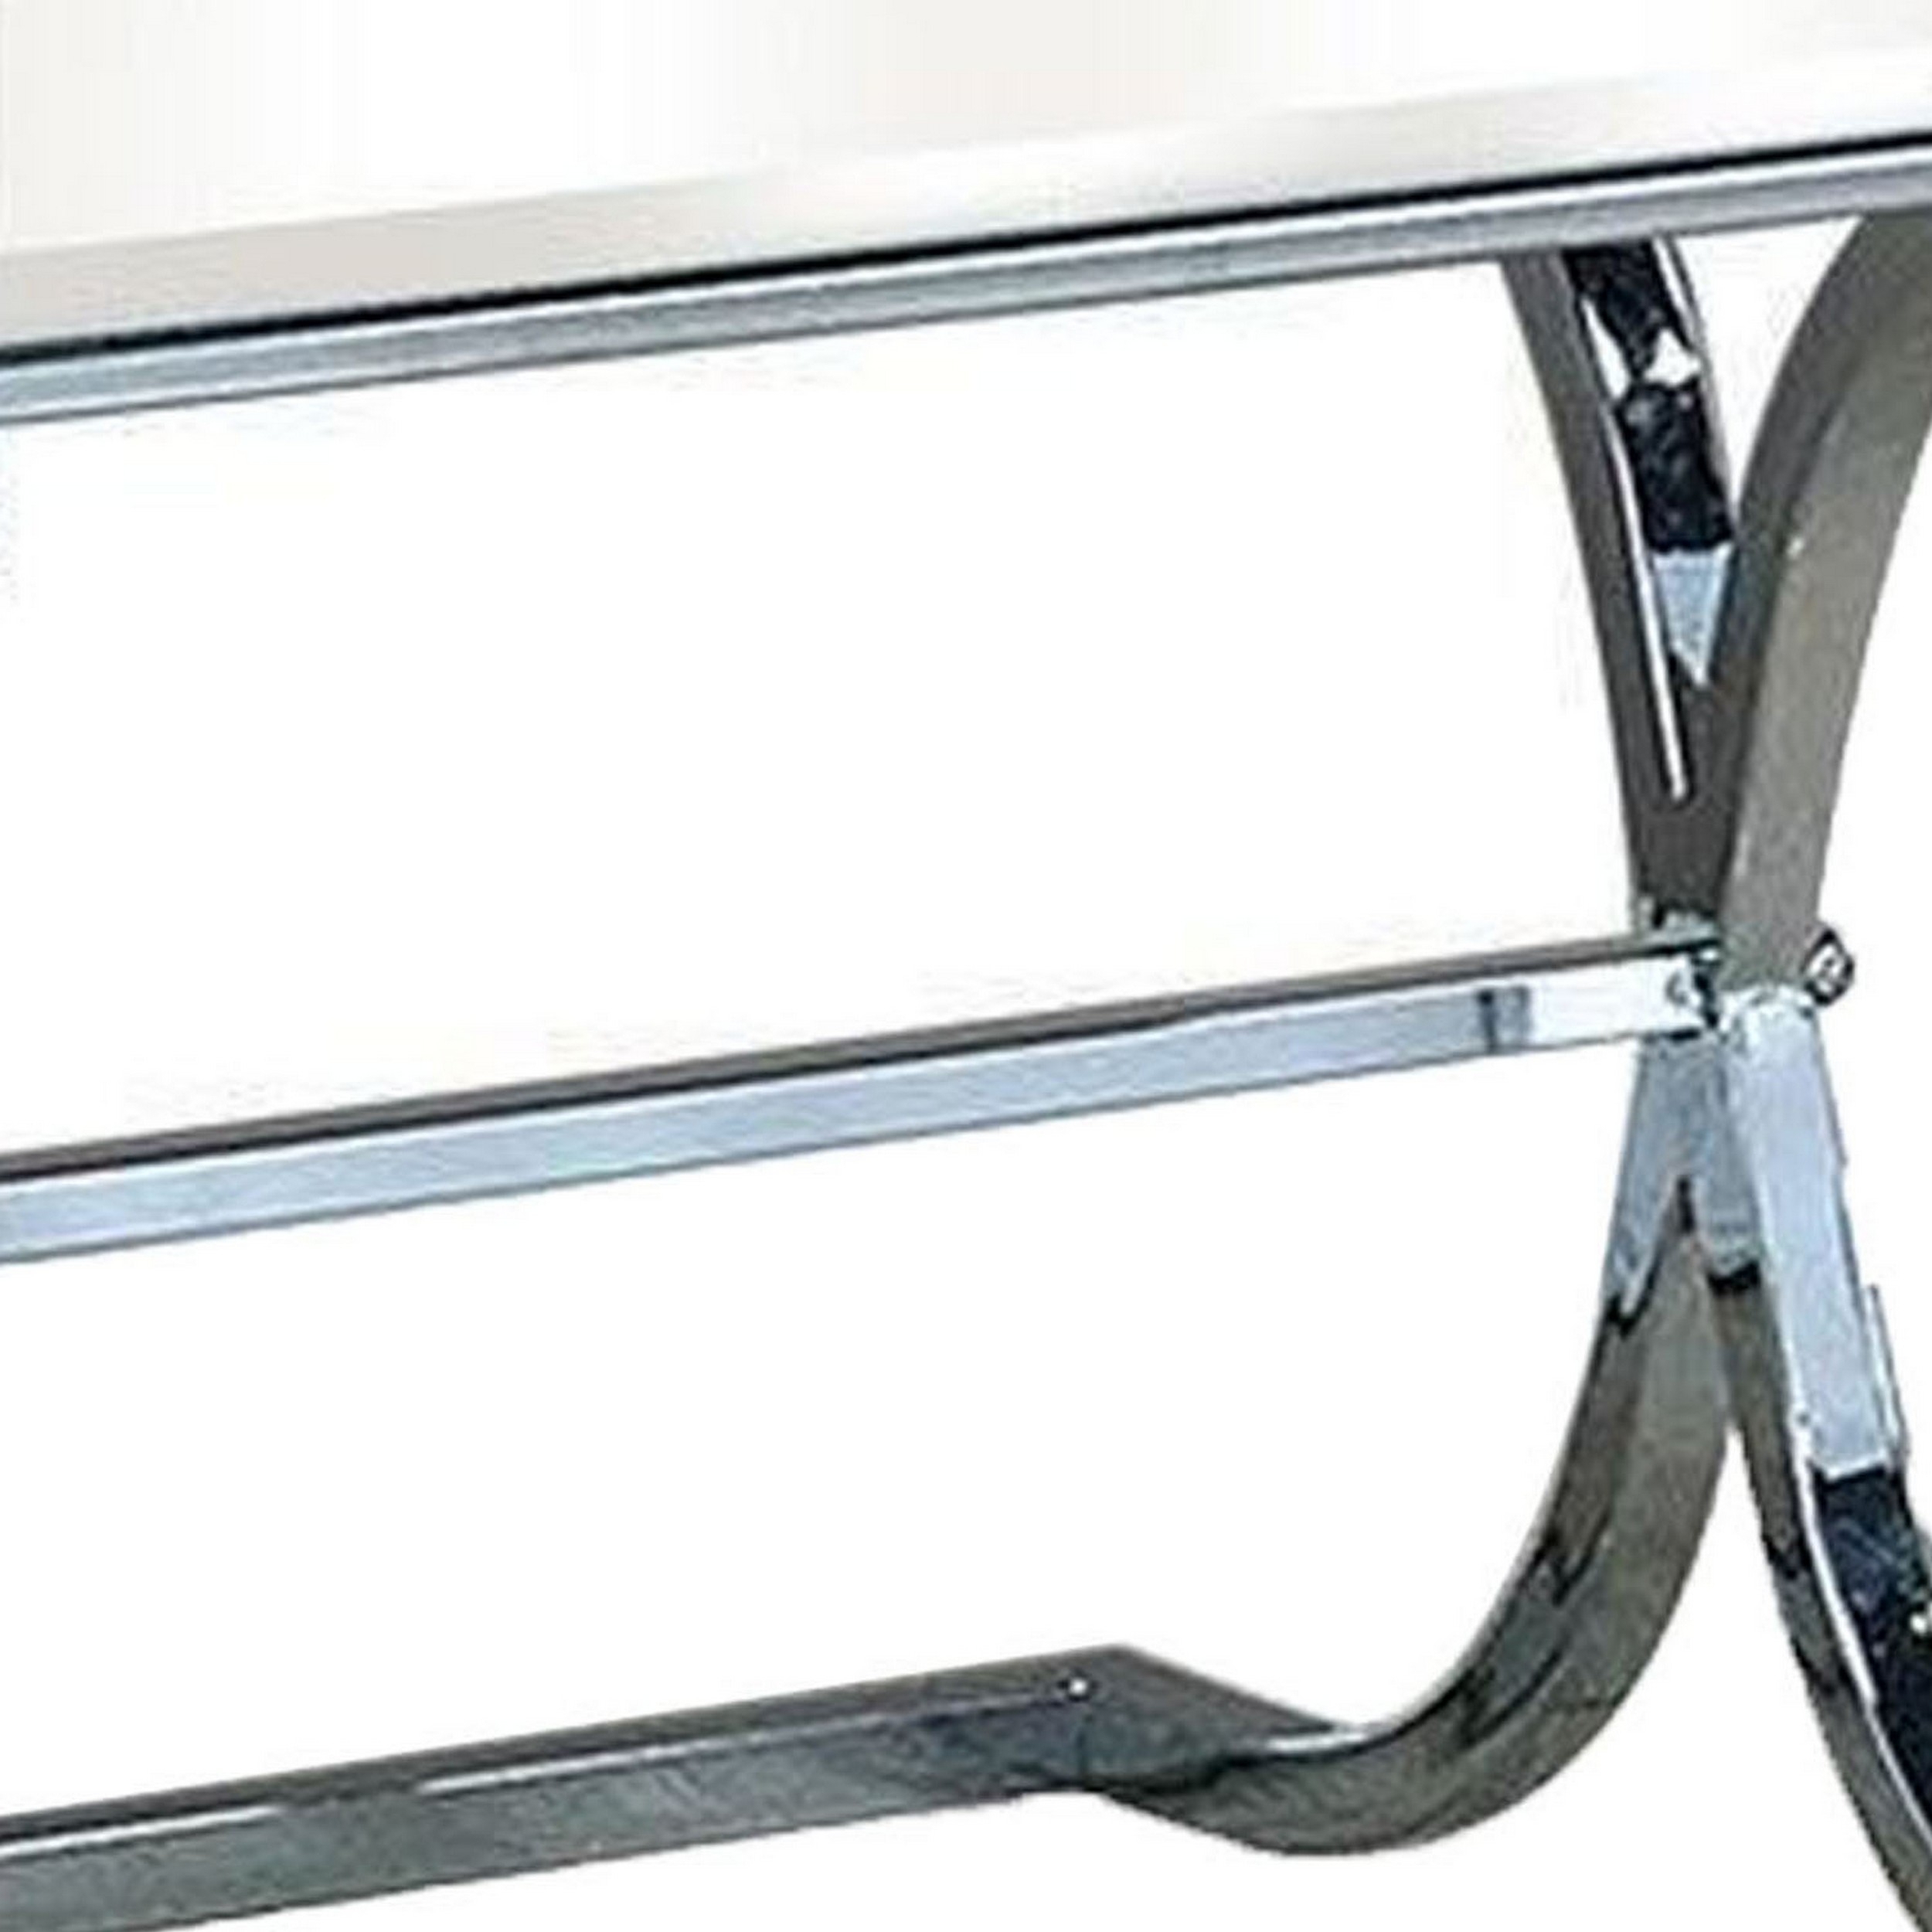 Gavin 24 Inch Side End Table, Mirrored Panels, Curved Crossed Base, Chrome - Saltoro Sherpi